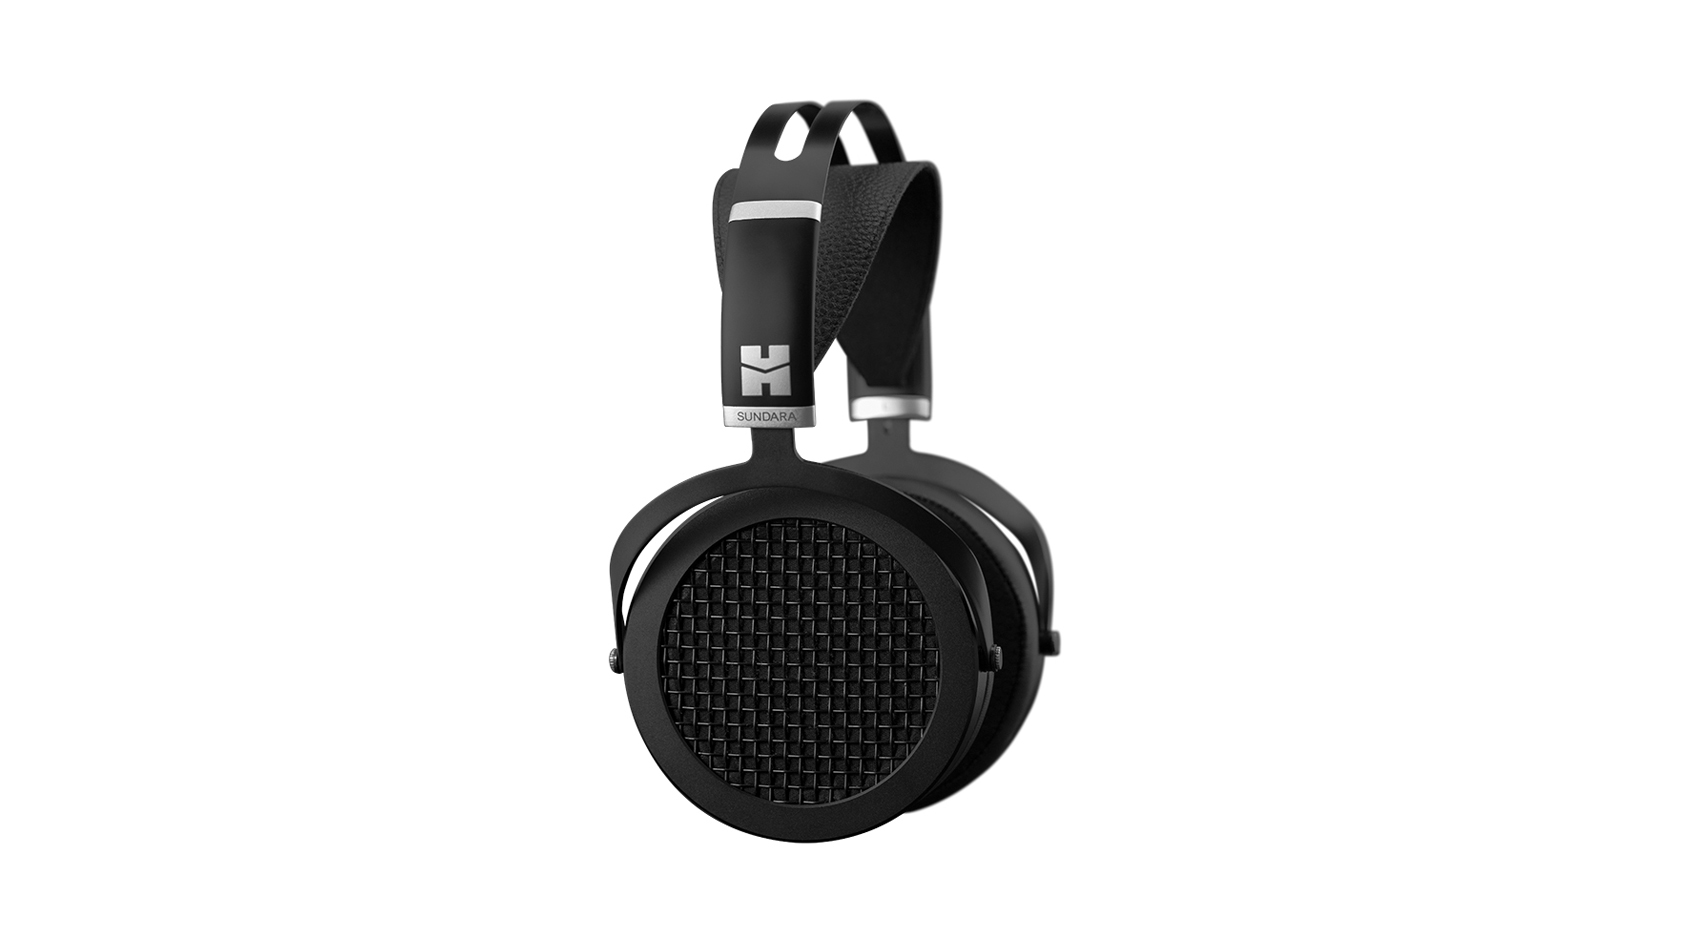 The Hifiman Sundara headphones in black against a white background.